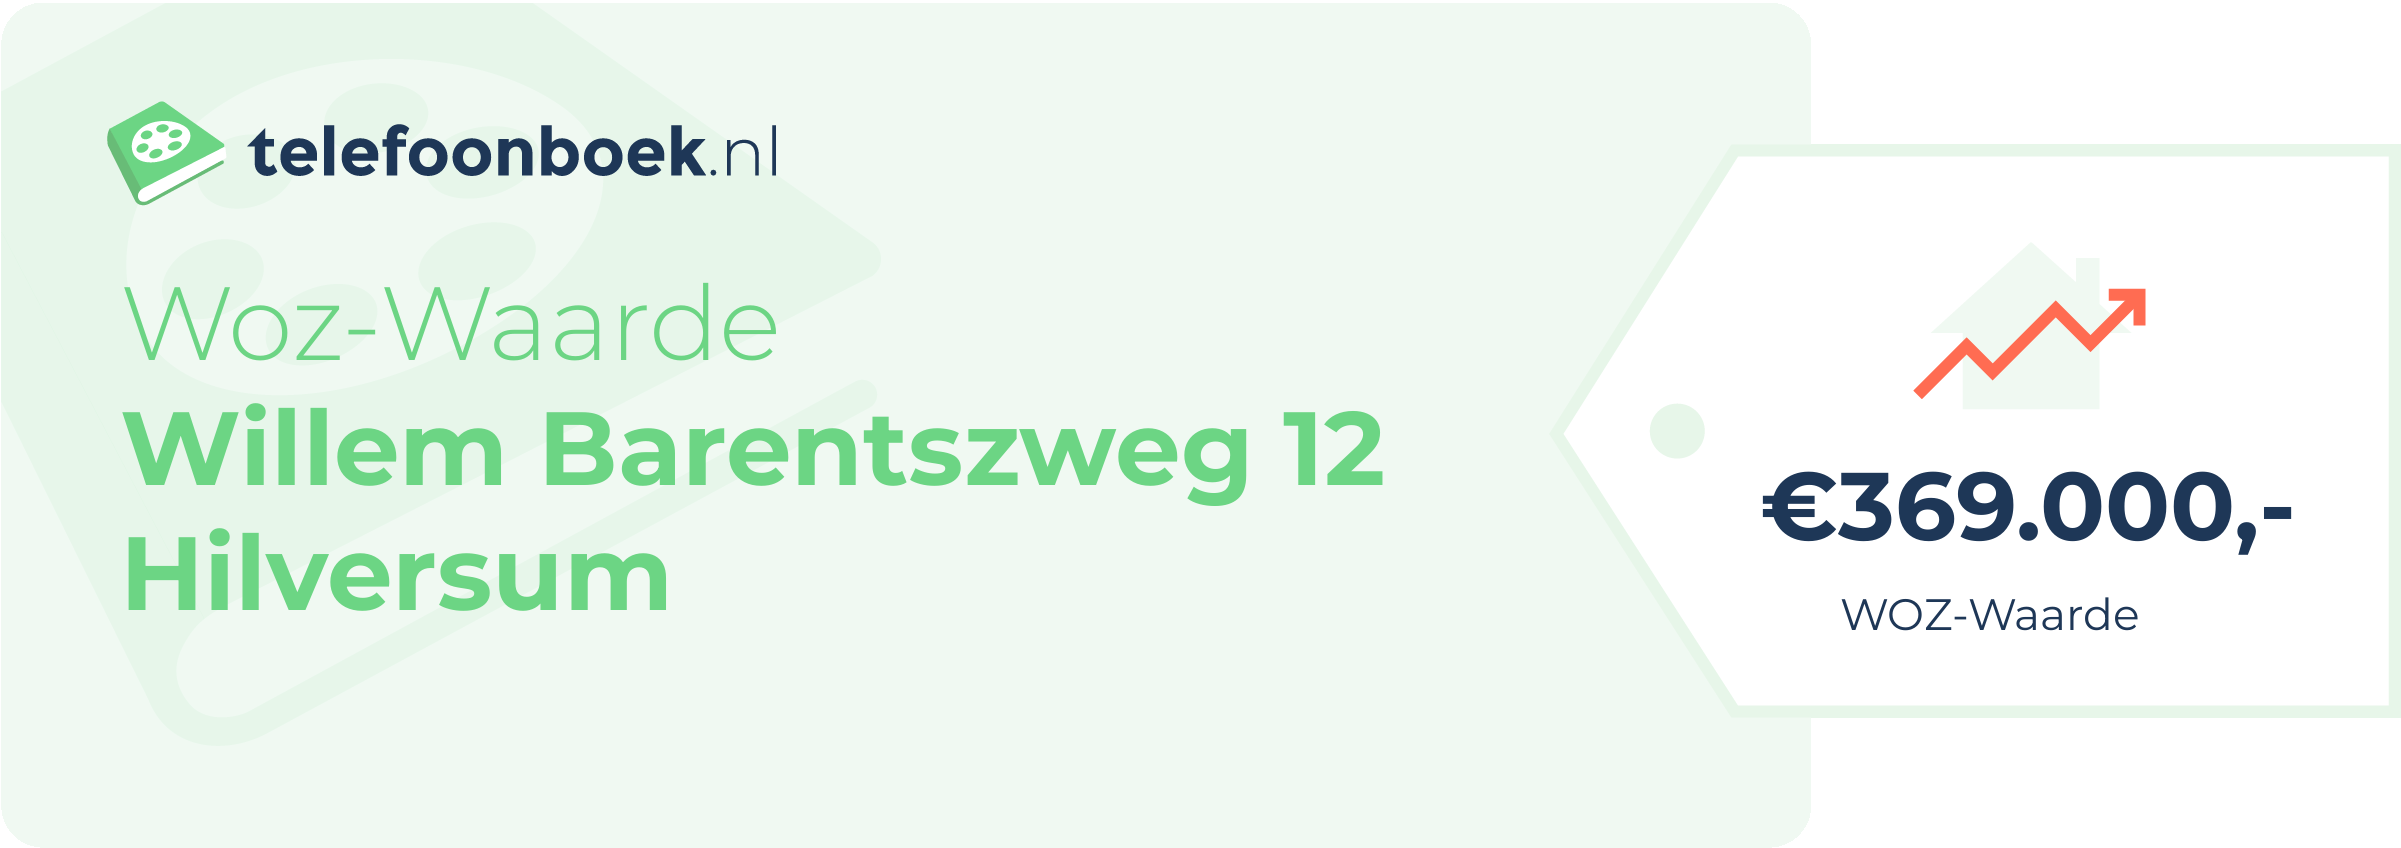 WOZ-waarde Willem Barentszweg 12 Hilversum